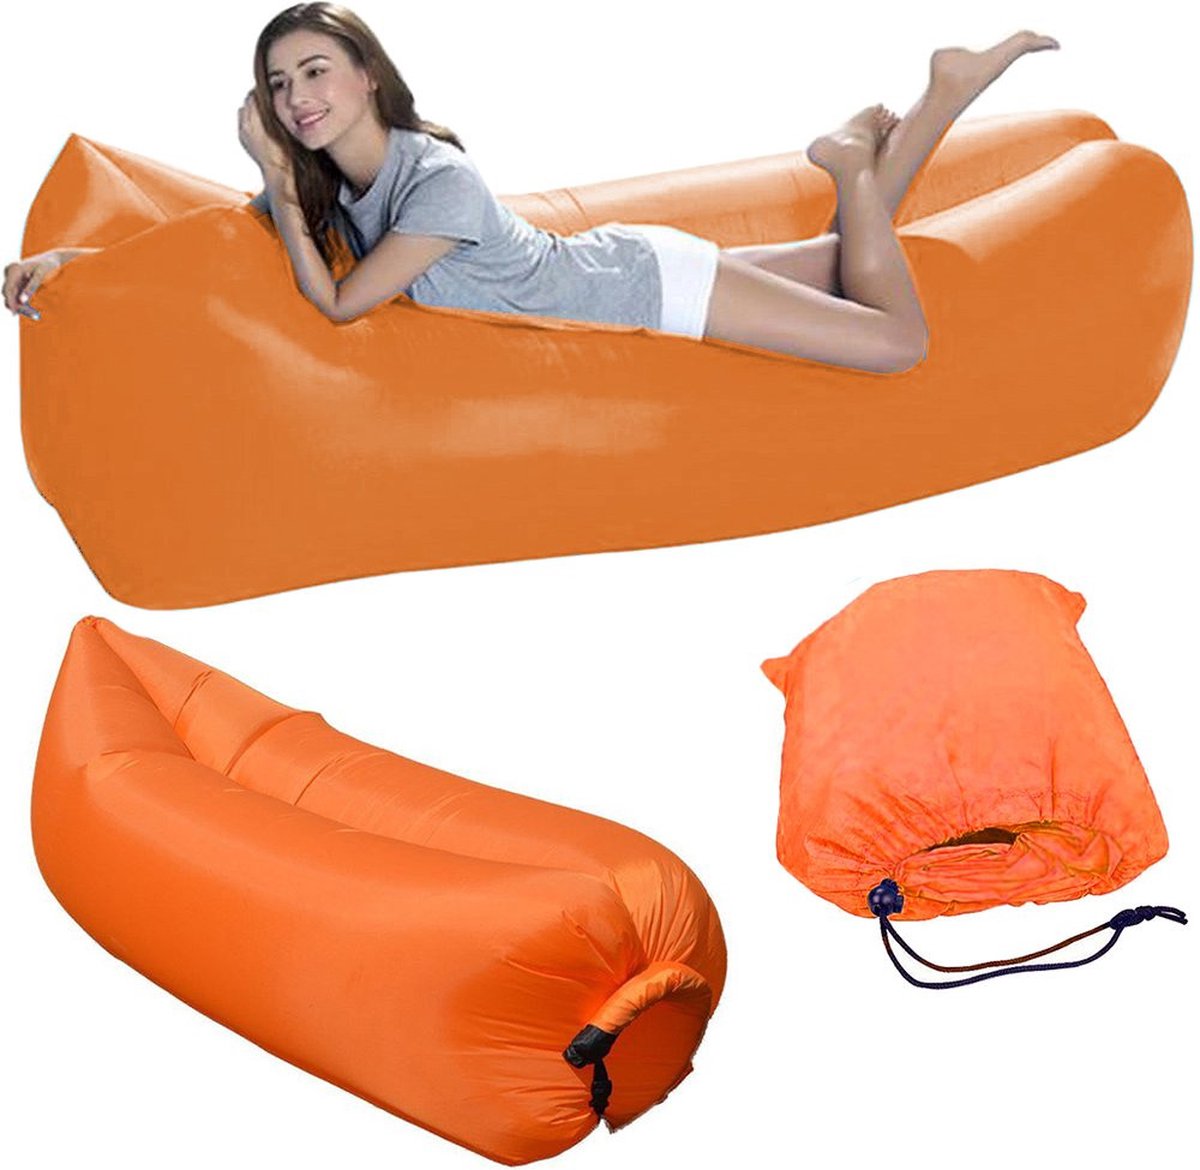 Opblaasbare zitzak oranje - Volwassenen luchtbed - Air lounger - Luchtzak 220x70 cm - Ligzak voor op het strand